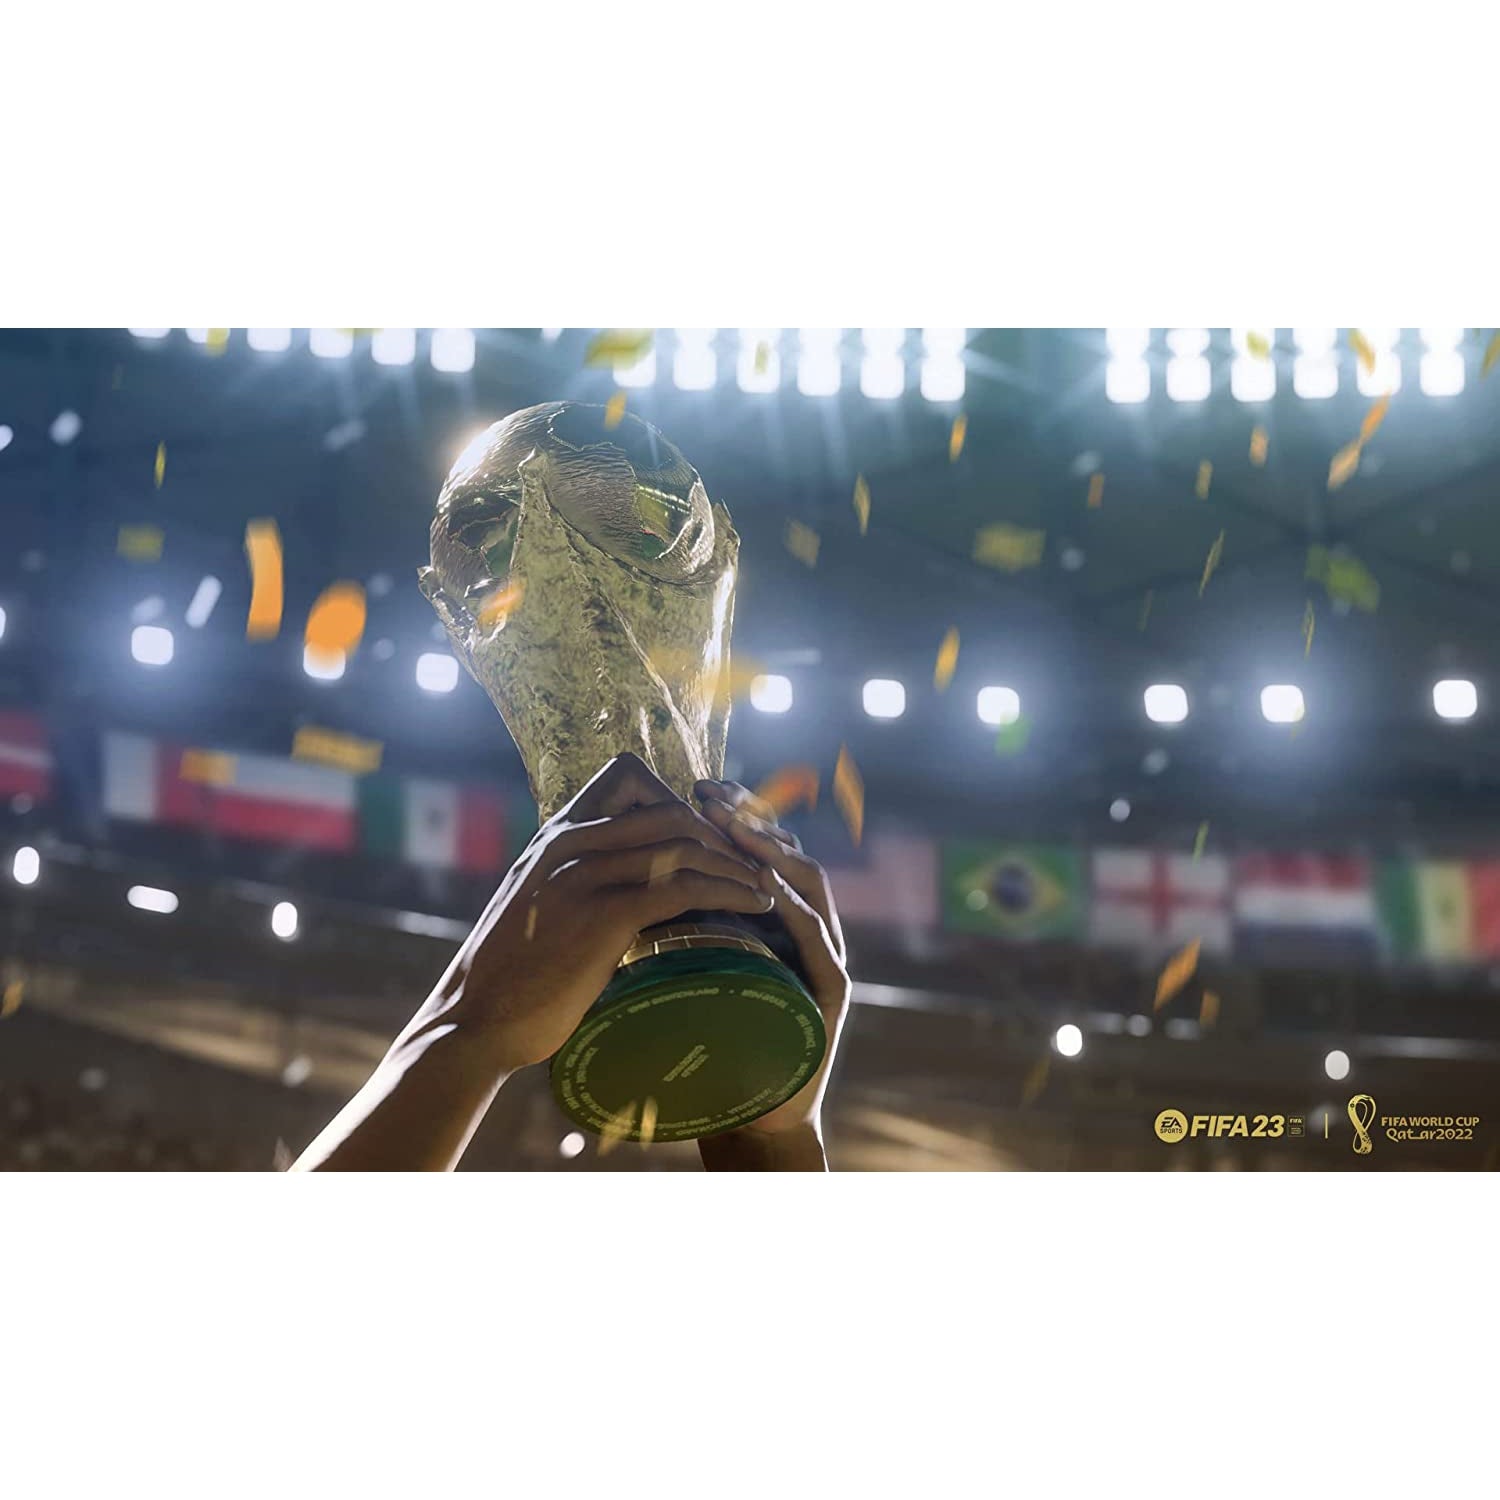 FIFA 23 (PS4) - New